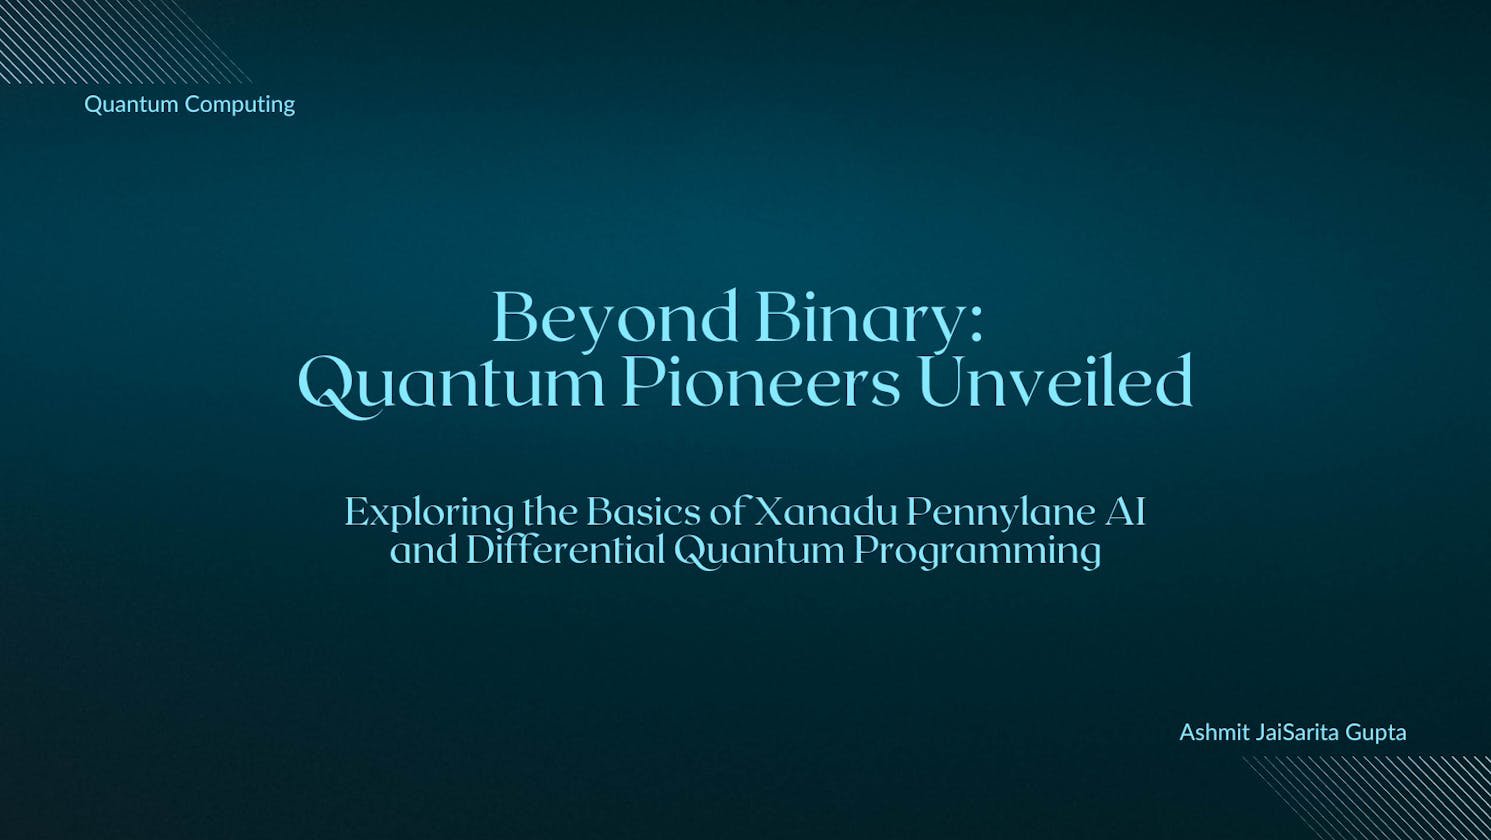 Exploring the Basics of Xanadu Pennylane AI and Differential Quantum Programming